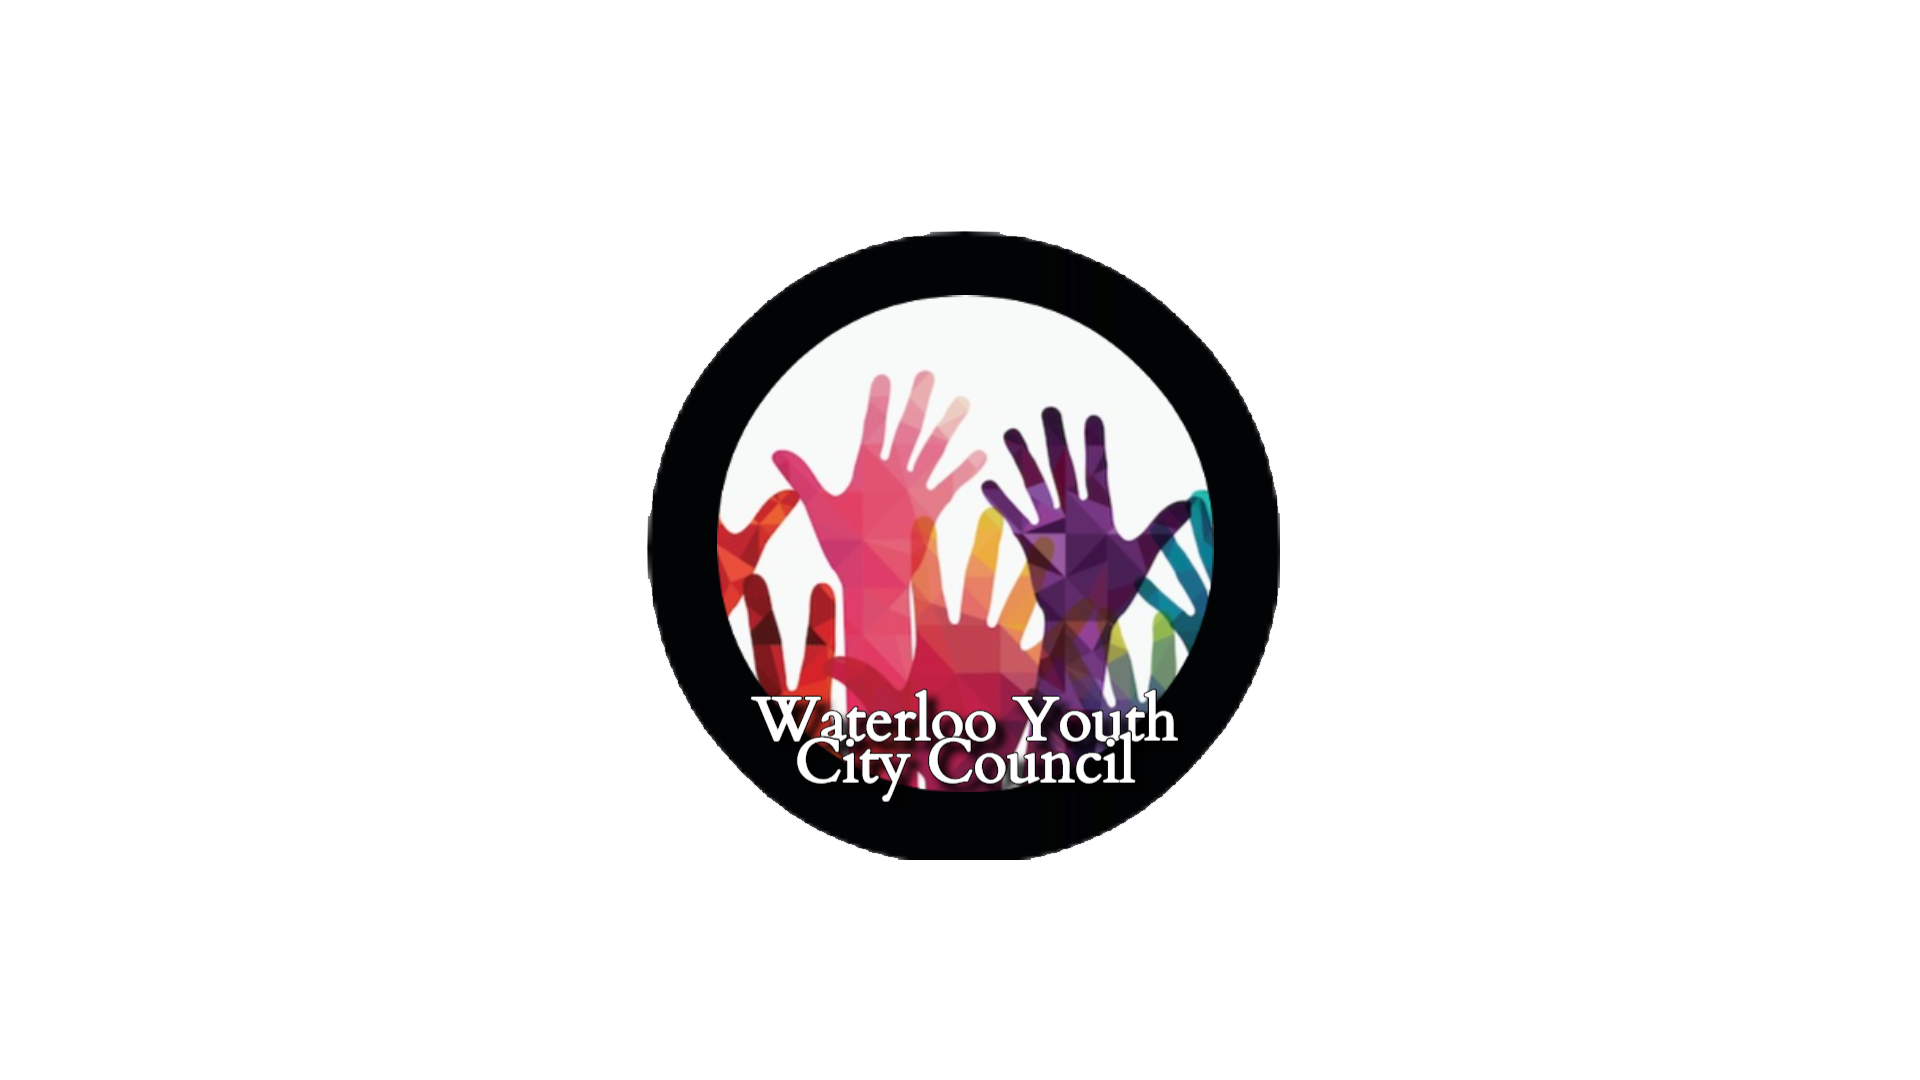 Waterloo Youth City Council logo